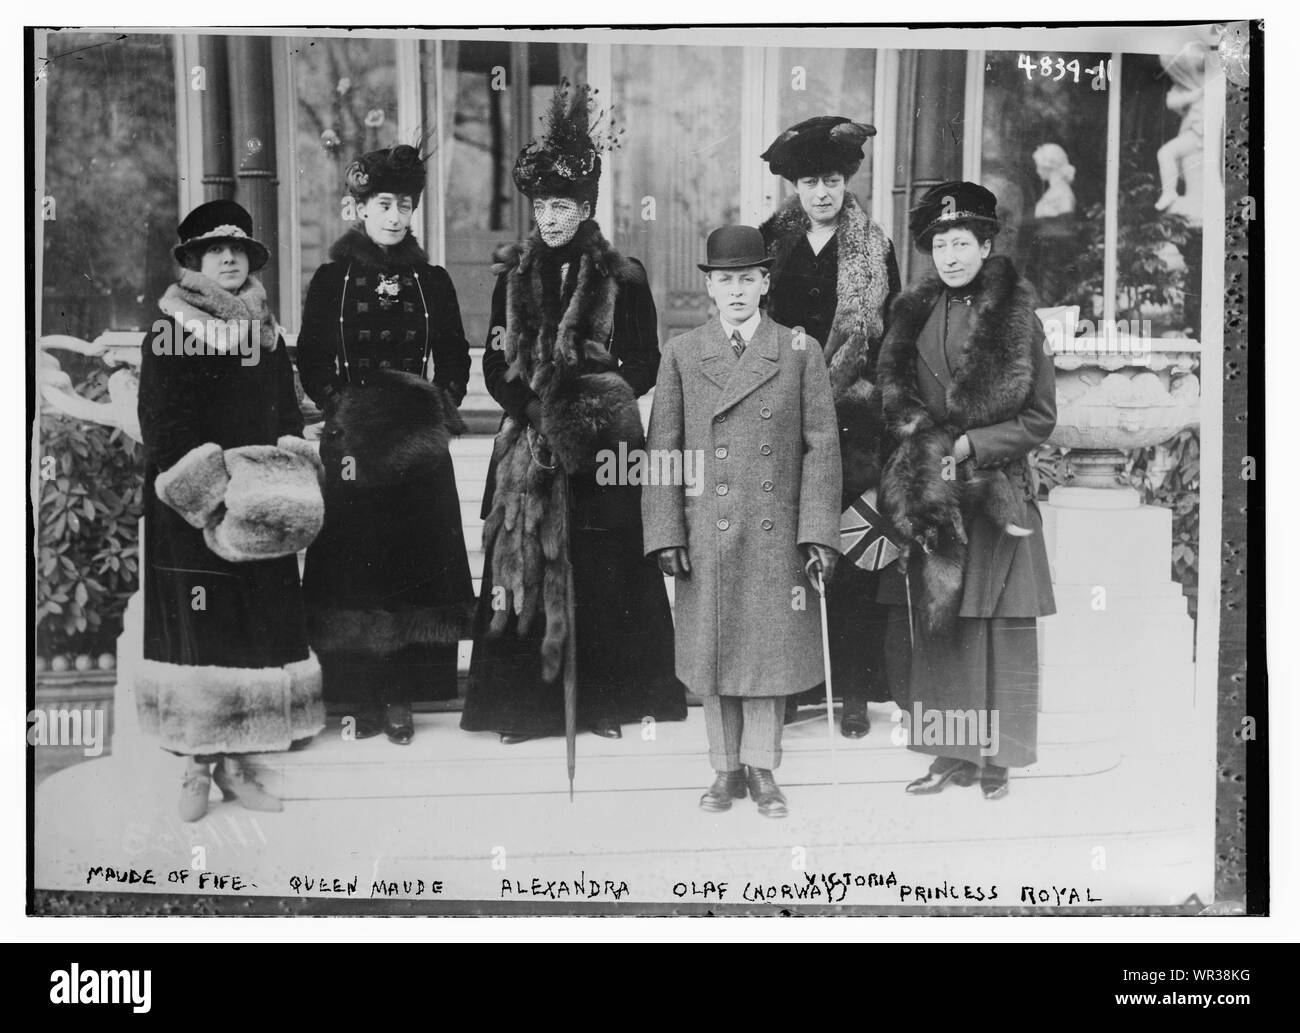 Maude de Fife, Queen Maud, Alexandra, l'Olaf (Norvège), Victoria, Princesse royale Banque D'Images